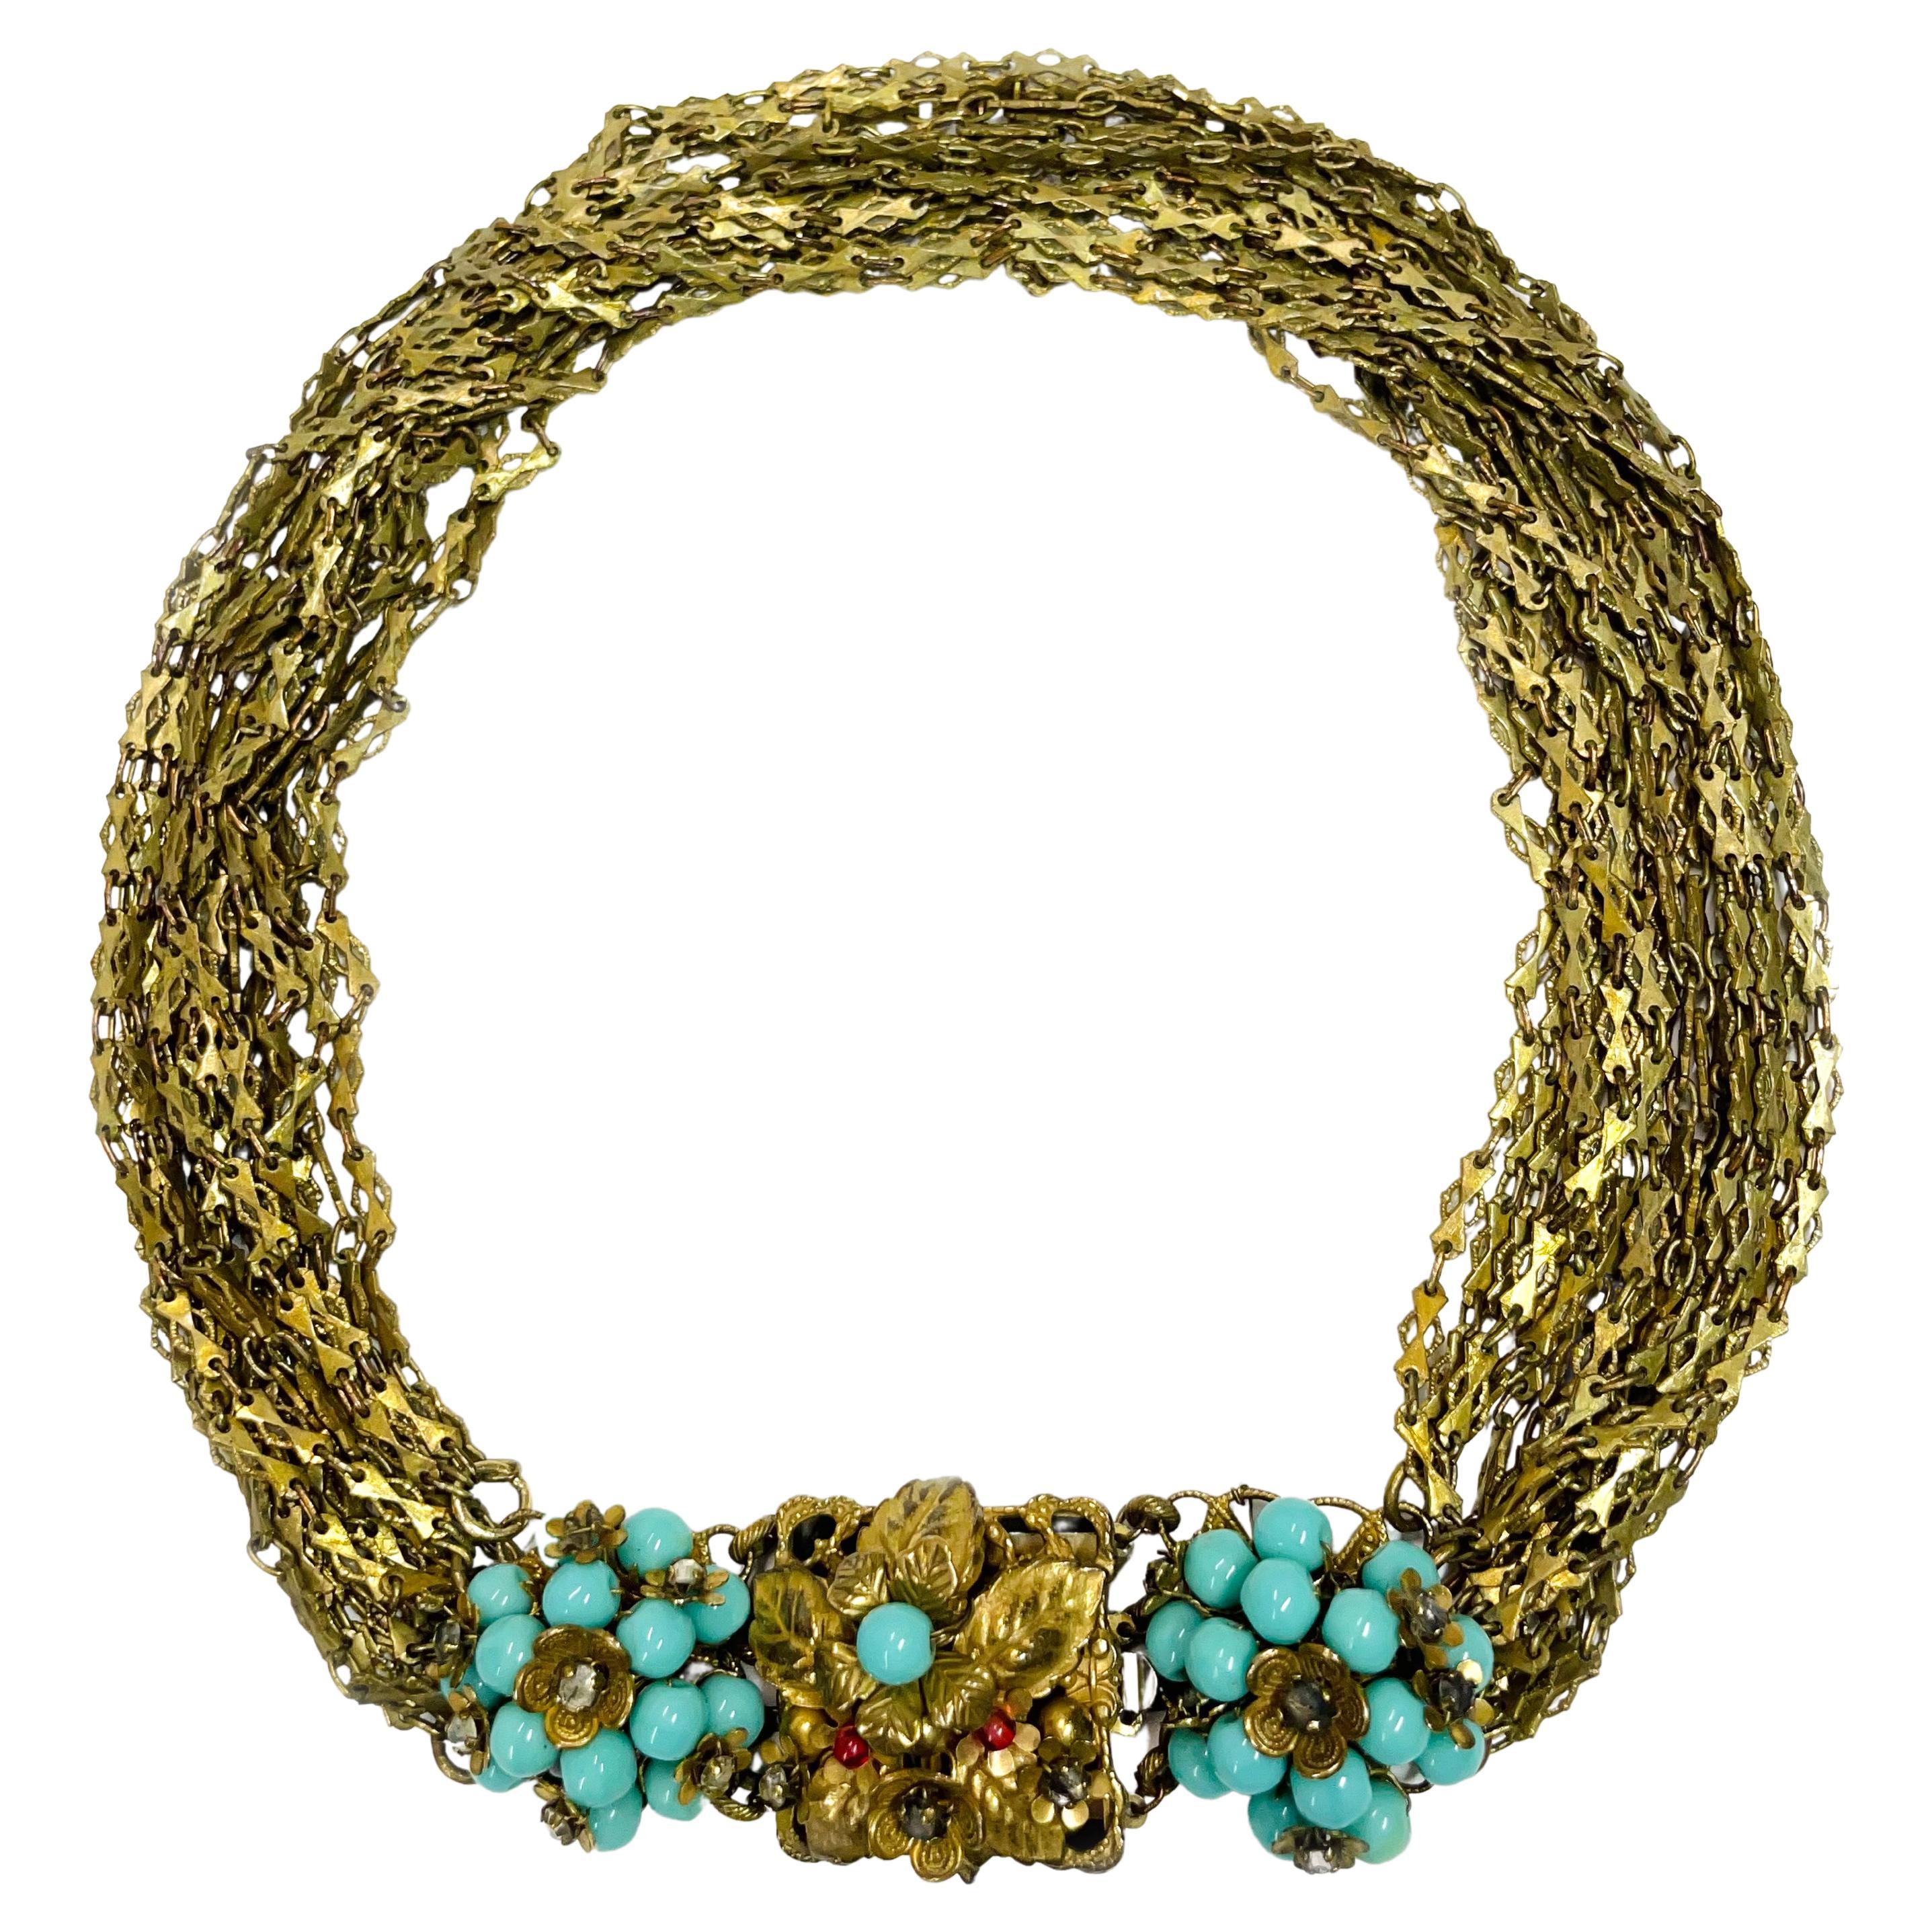 Miriam Haskell, collier de perles en verre turquoise à plusieurs rangs